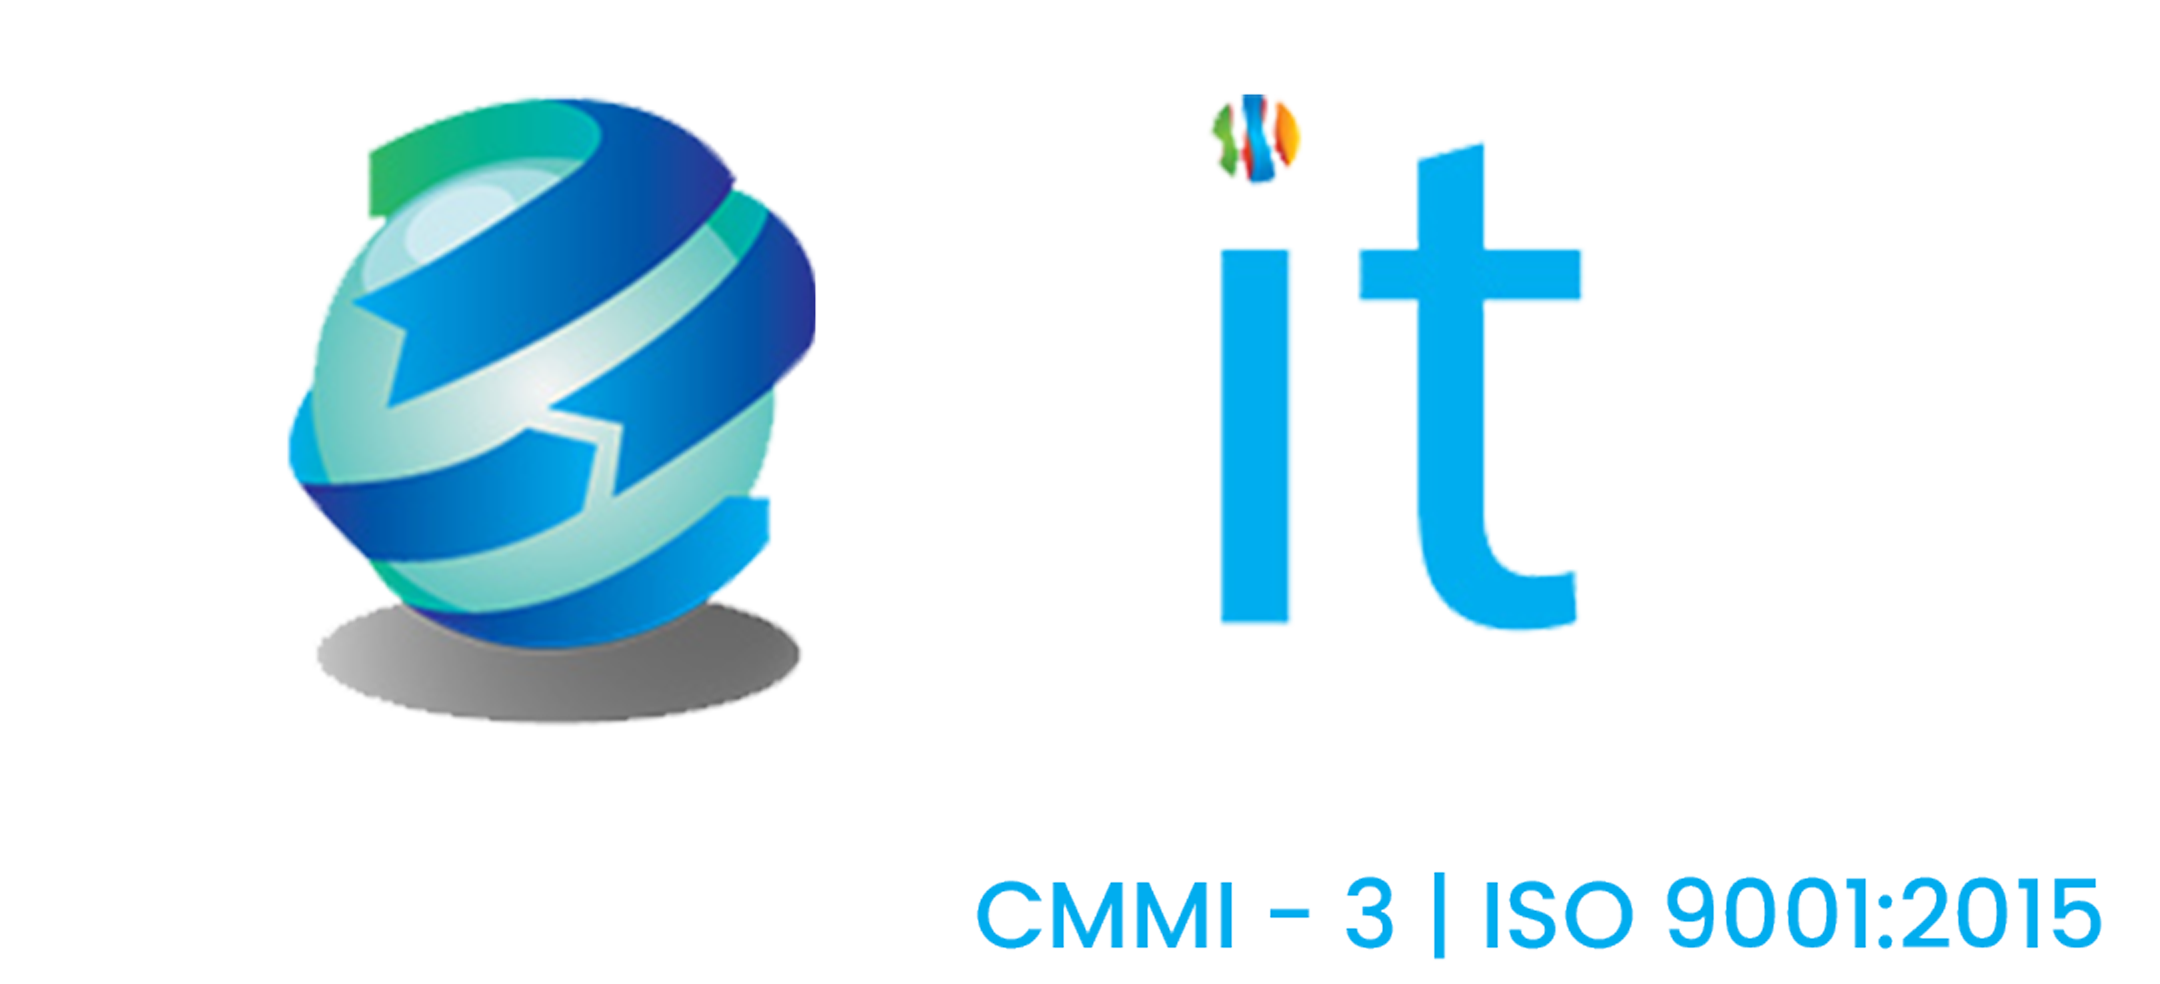 Aculance-Aculance-it-solutions-pvt-ltd-logo